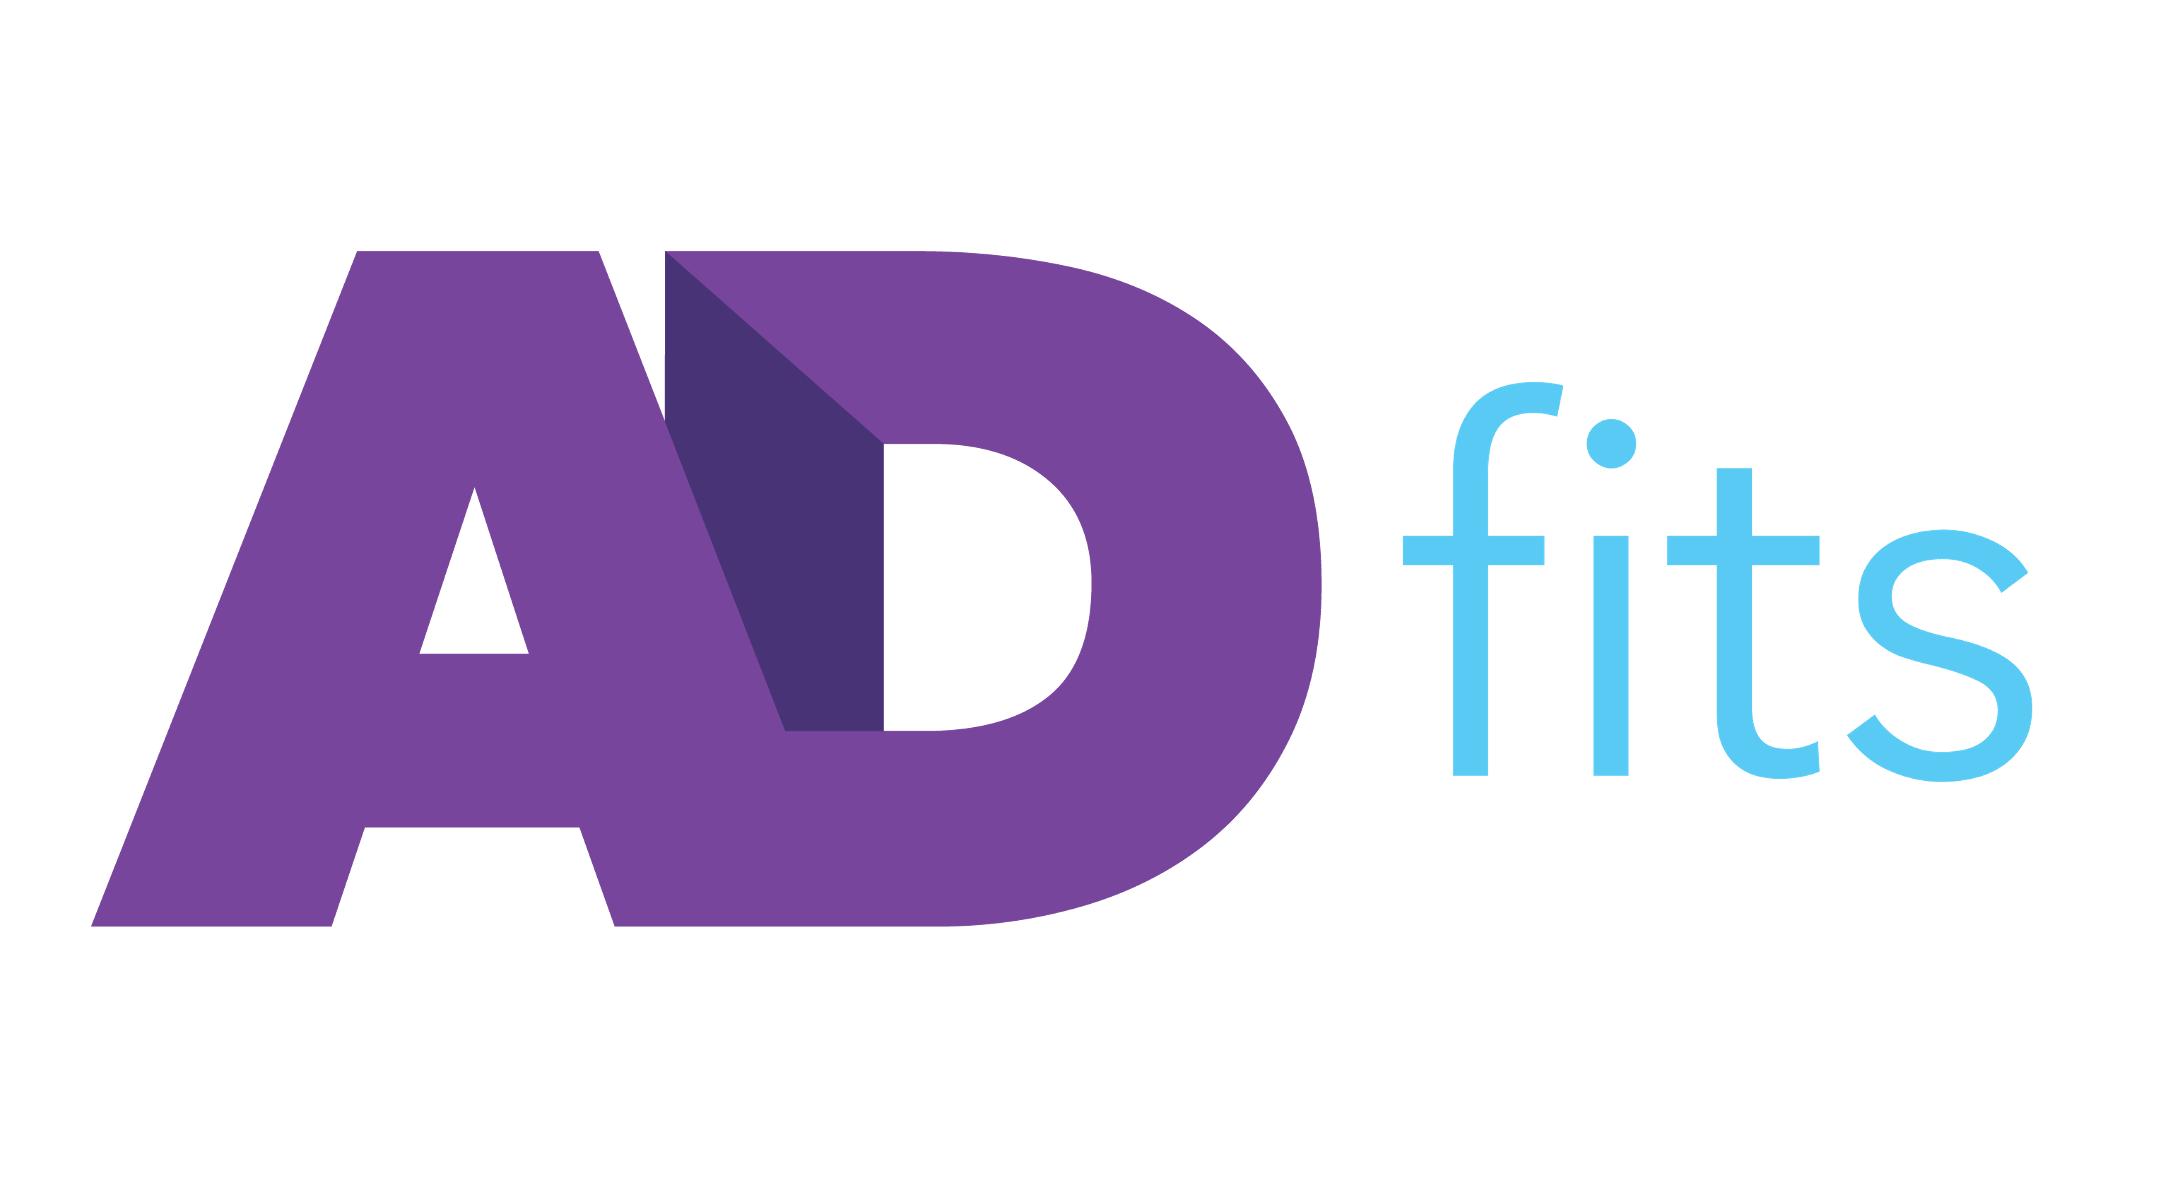 Adf logo purple